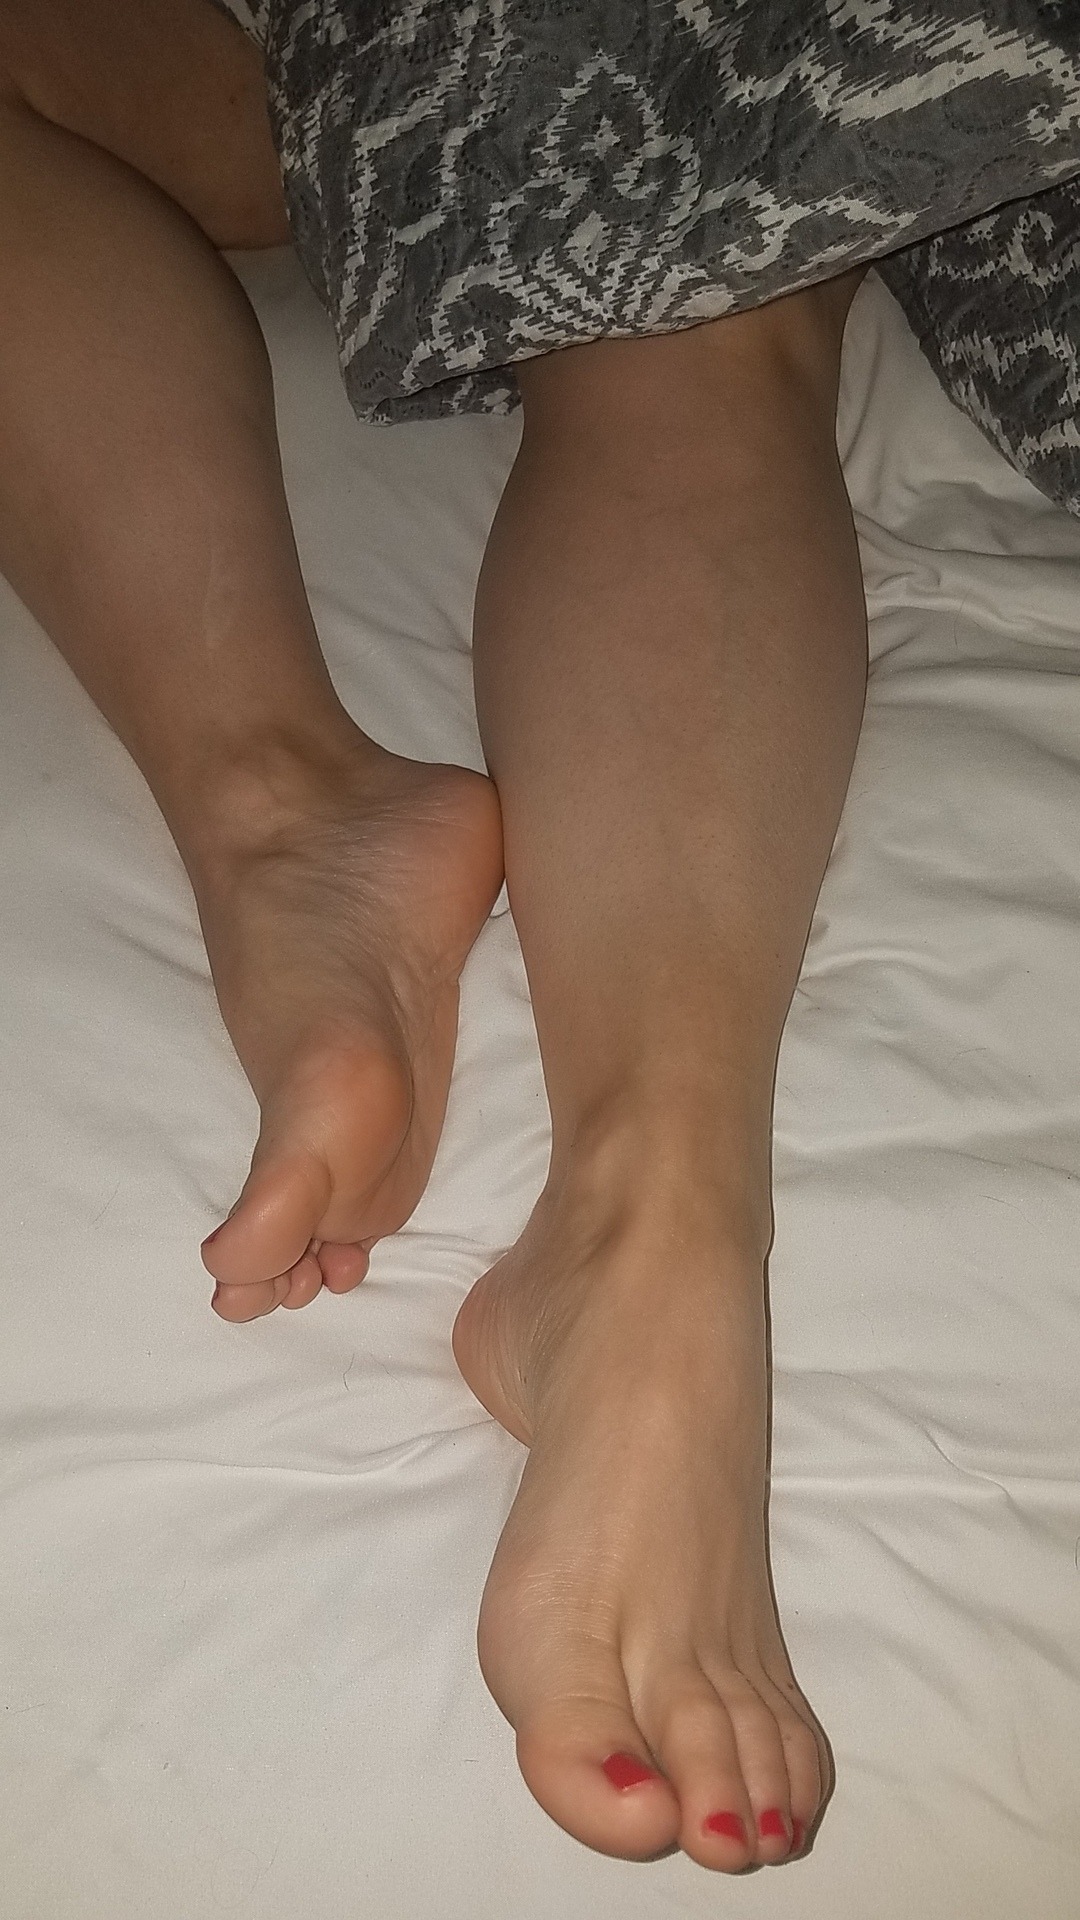 myprettywifesfeet:My pretty wifes beautiful sleeping feet.please comment